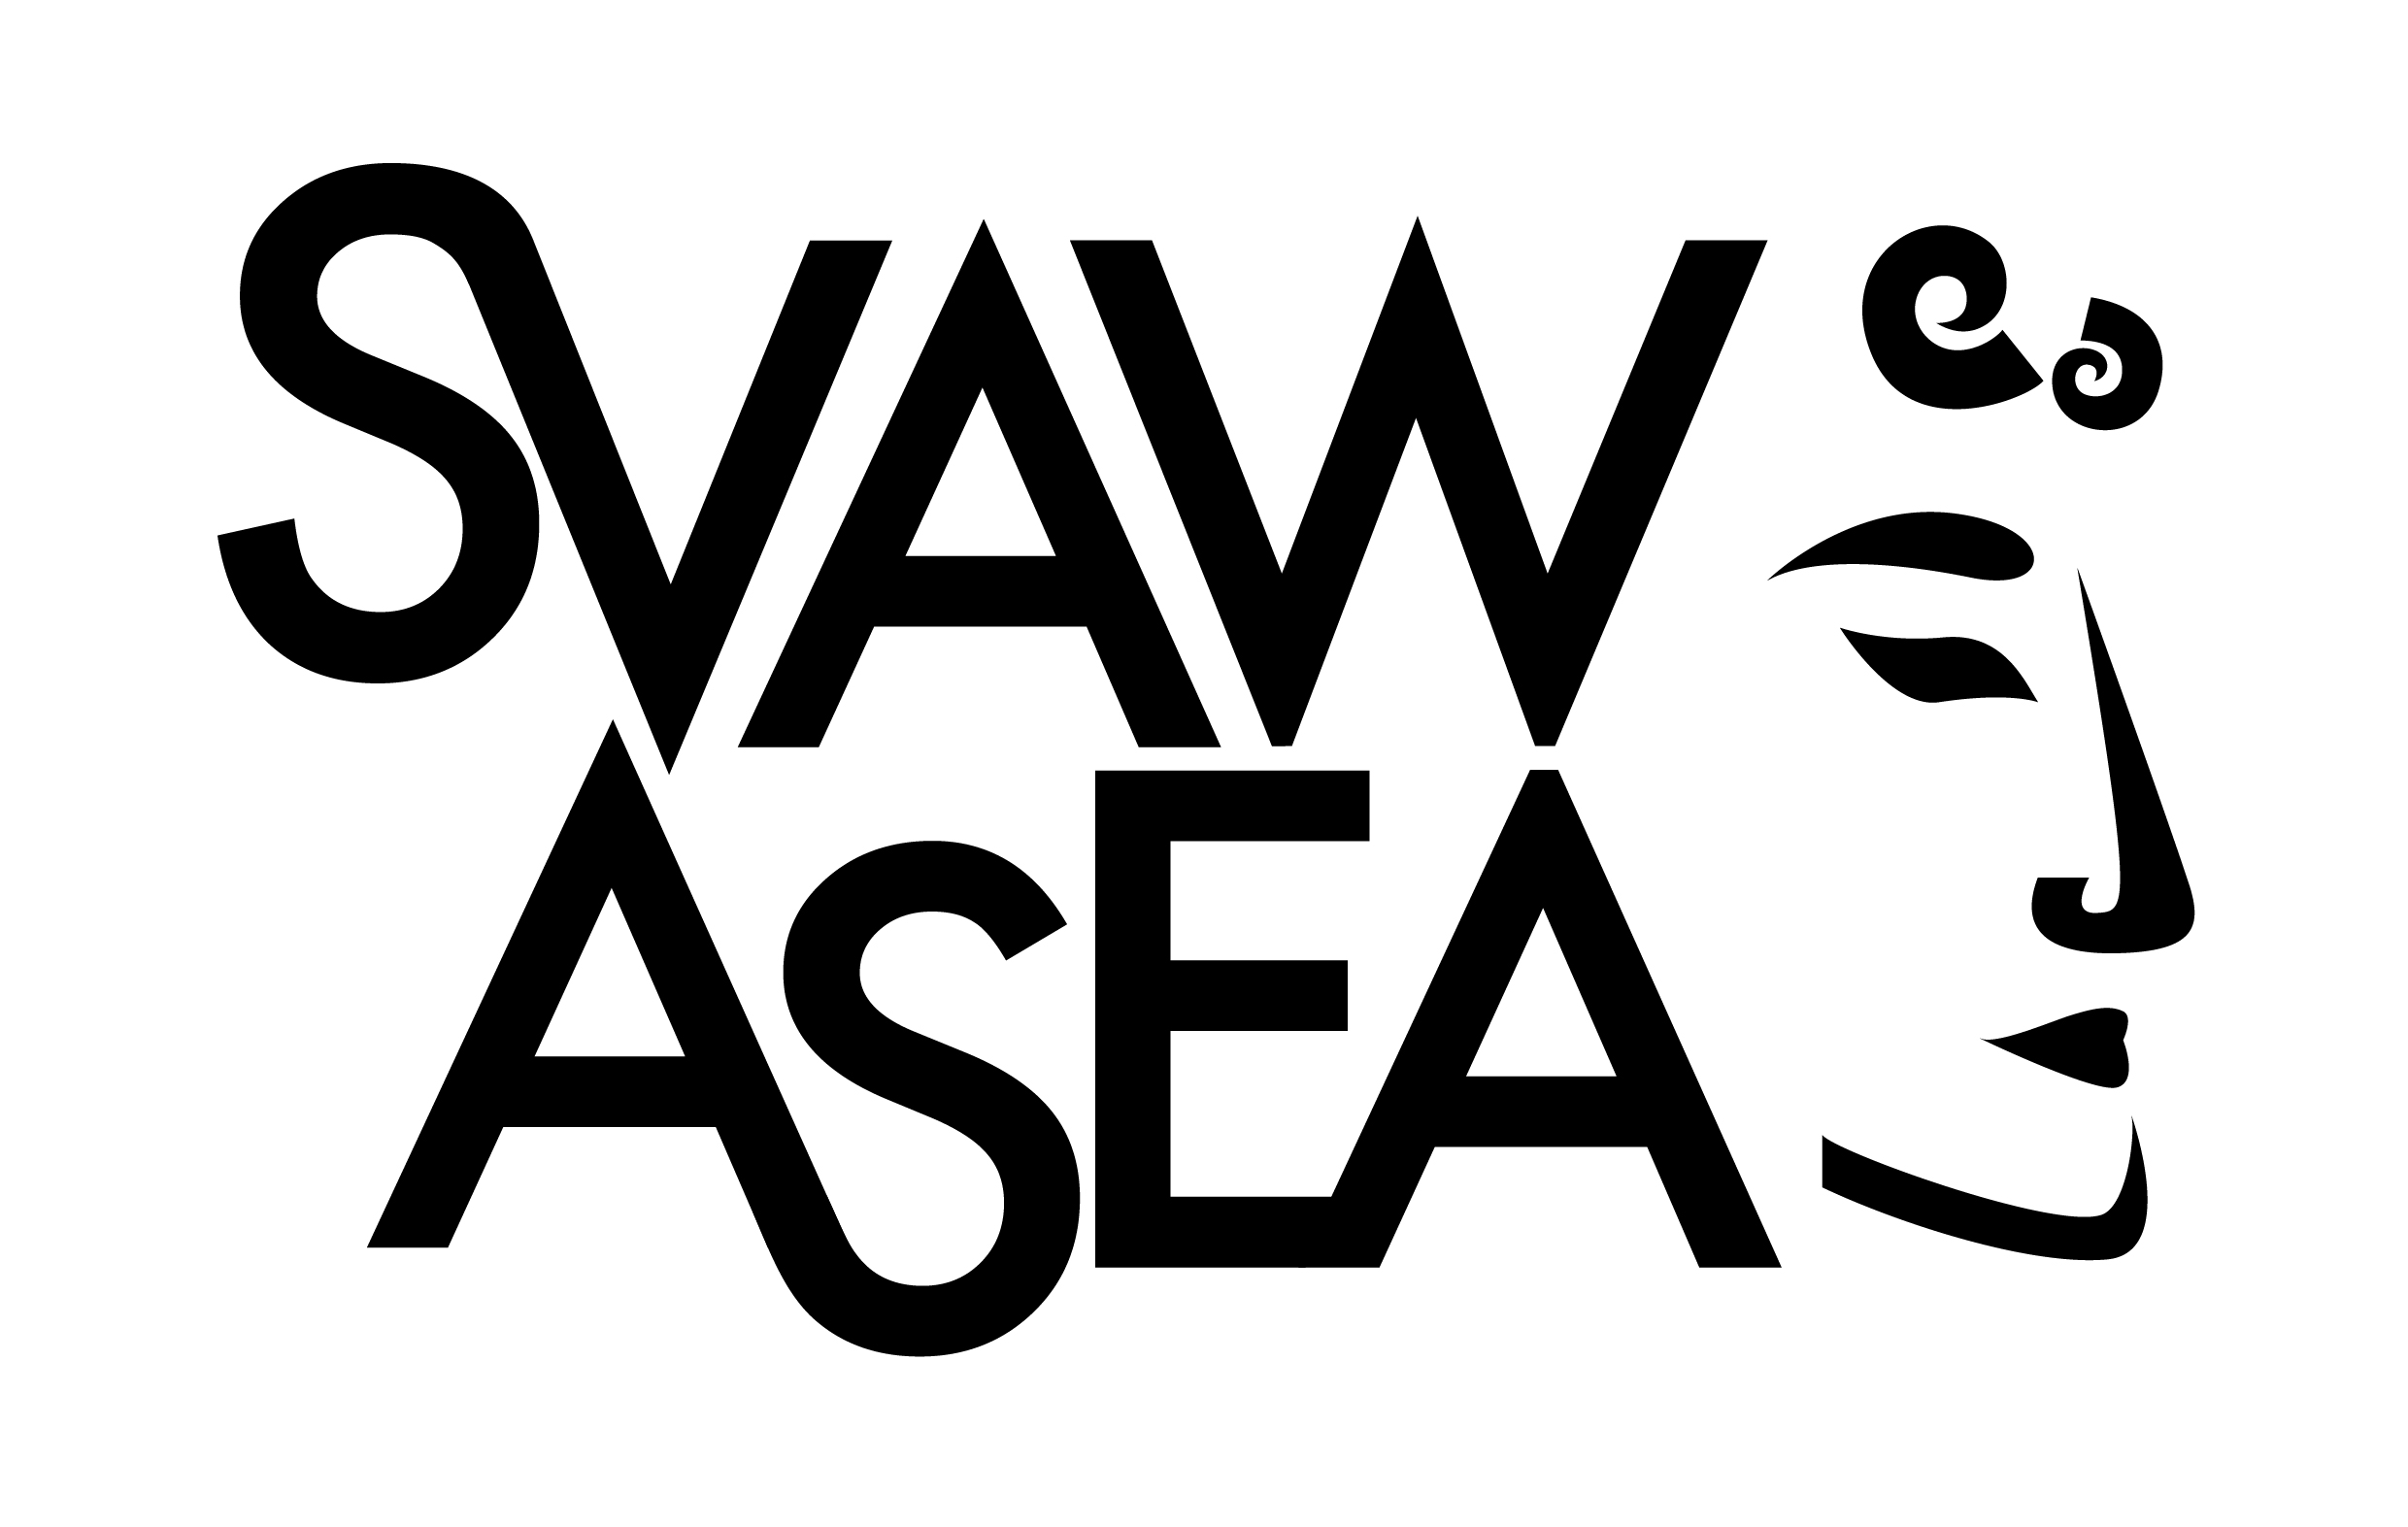 svaw-asea logo